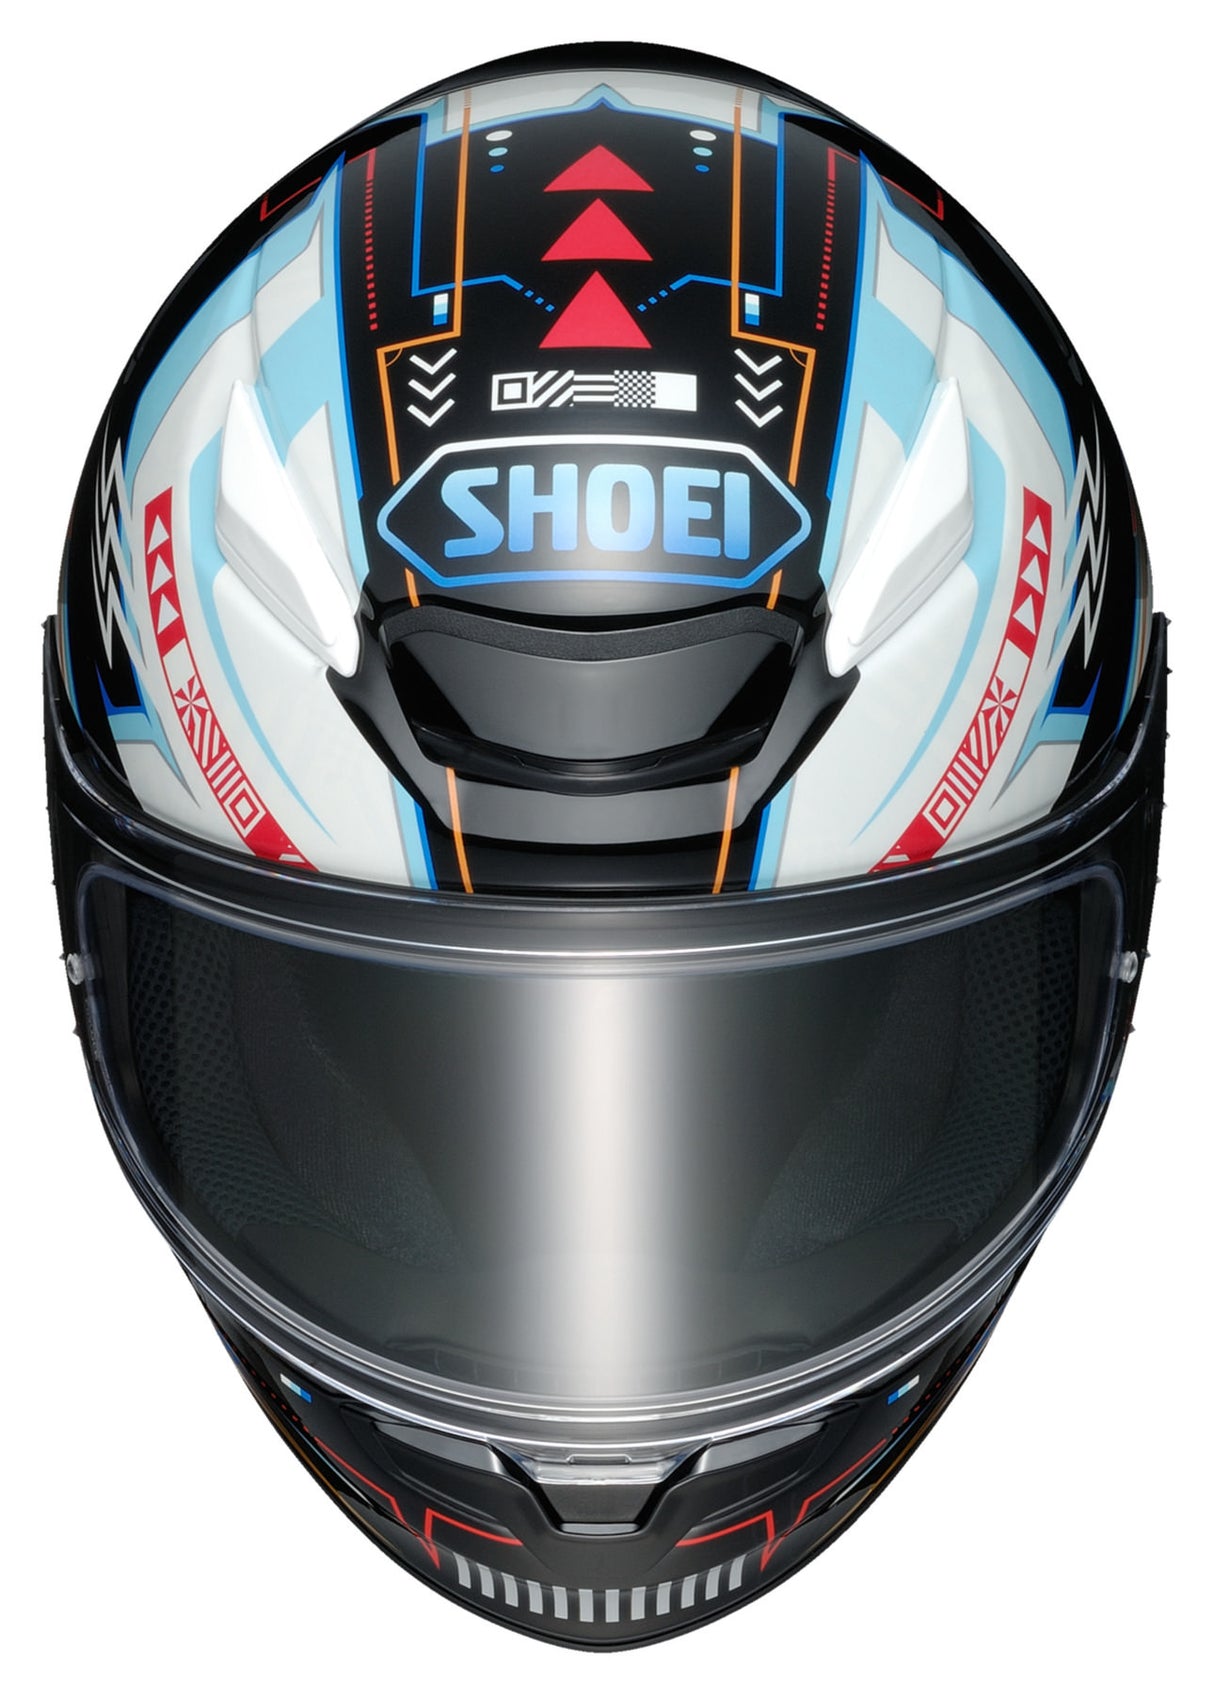 Shoei NXR2 Arcane TC-10 Motorcycle Helmet